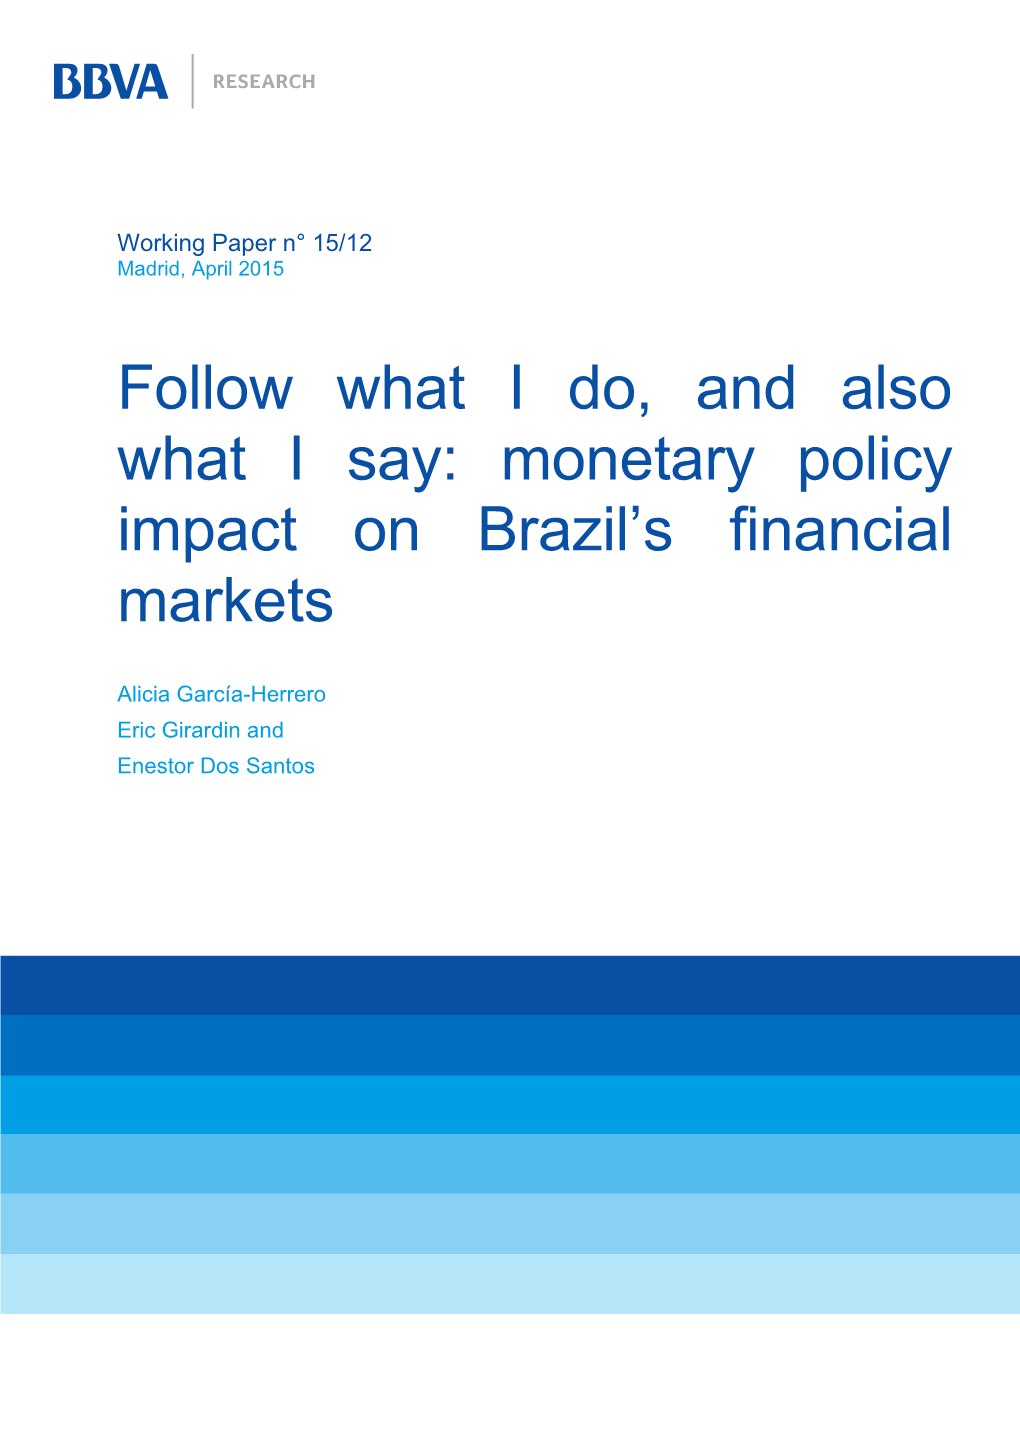 Monetary Policy Impact on Brazil's Financial Markets